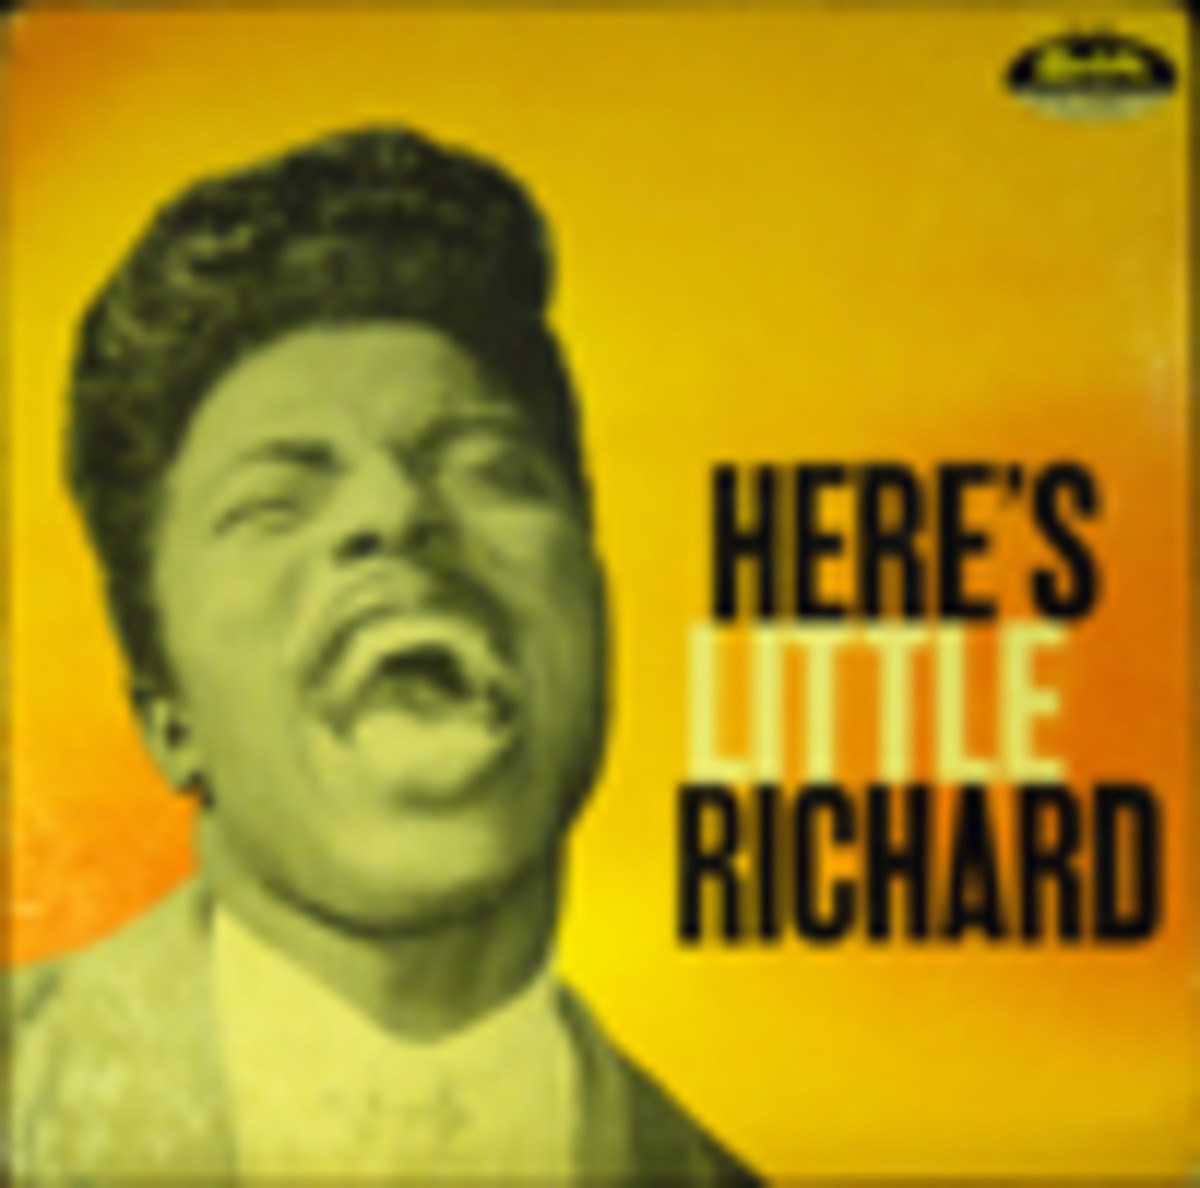 Little Richard Here's Little Richard